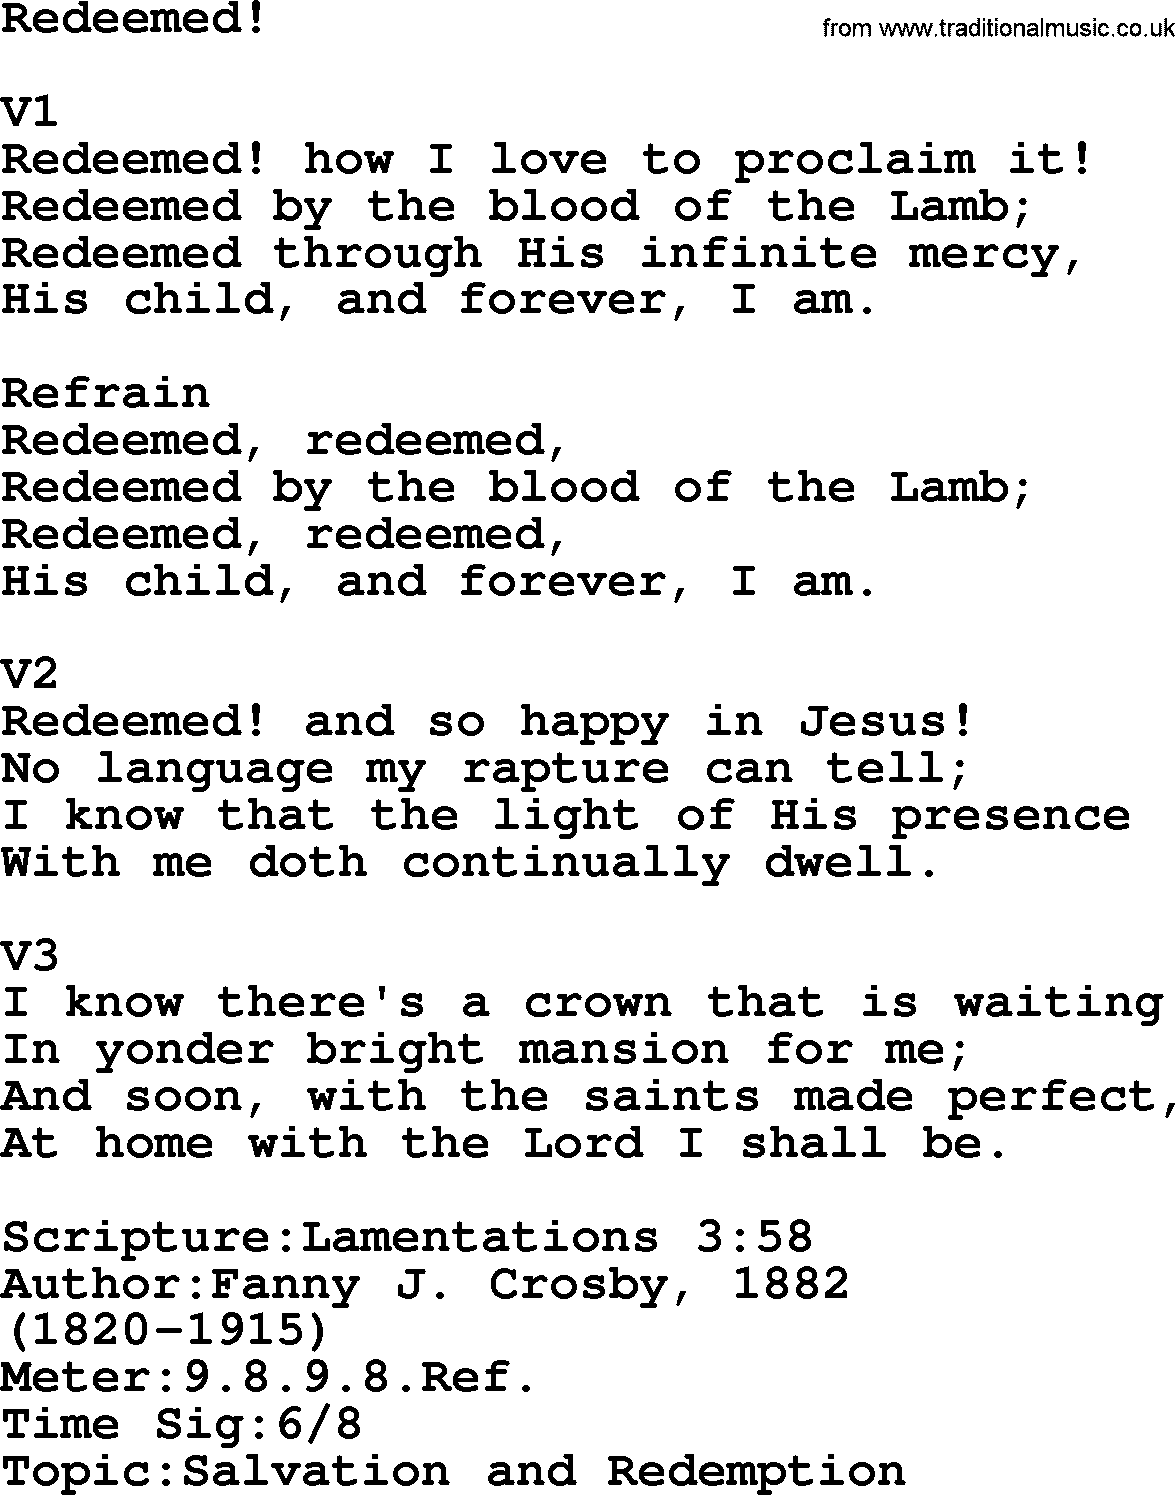 Adventist Hynms collection, Hymn: Redeemed!, lyrics with PDF